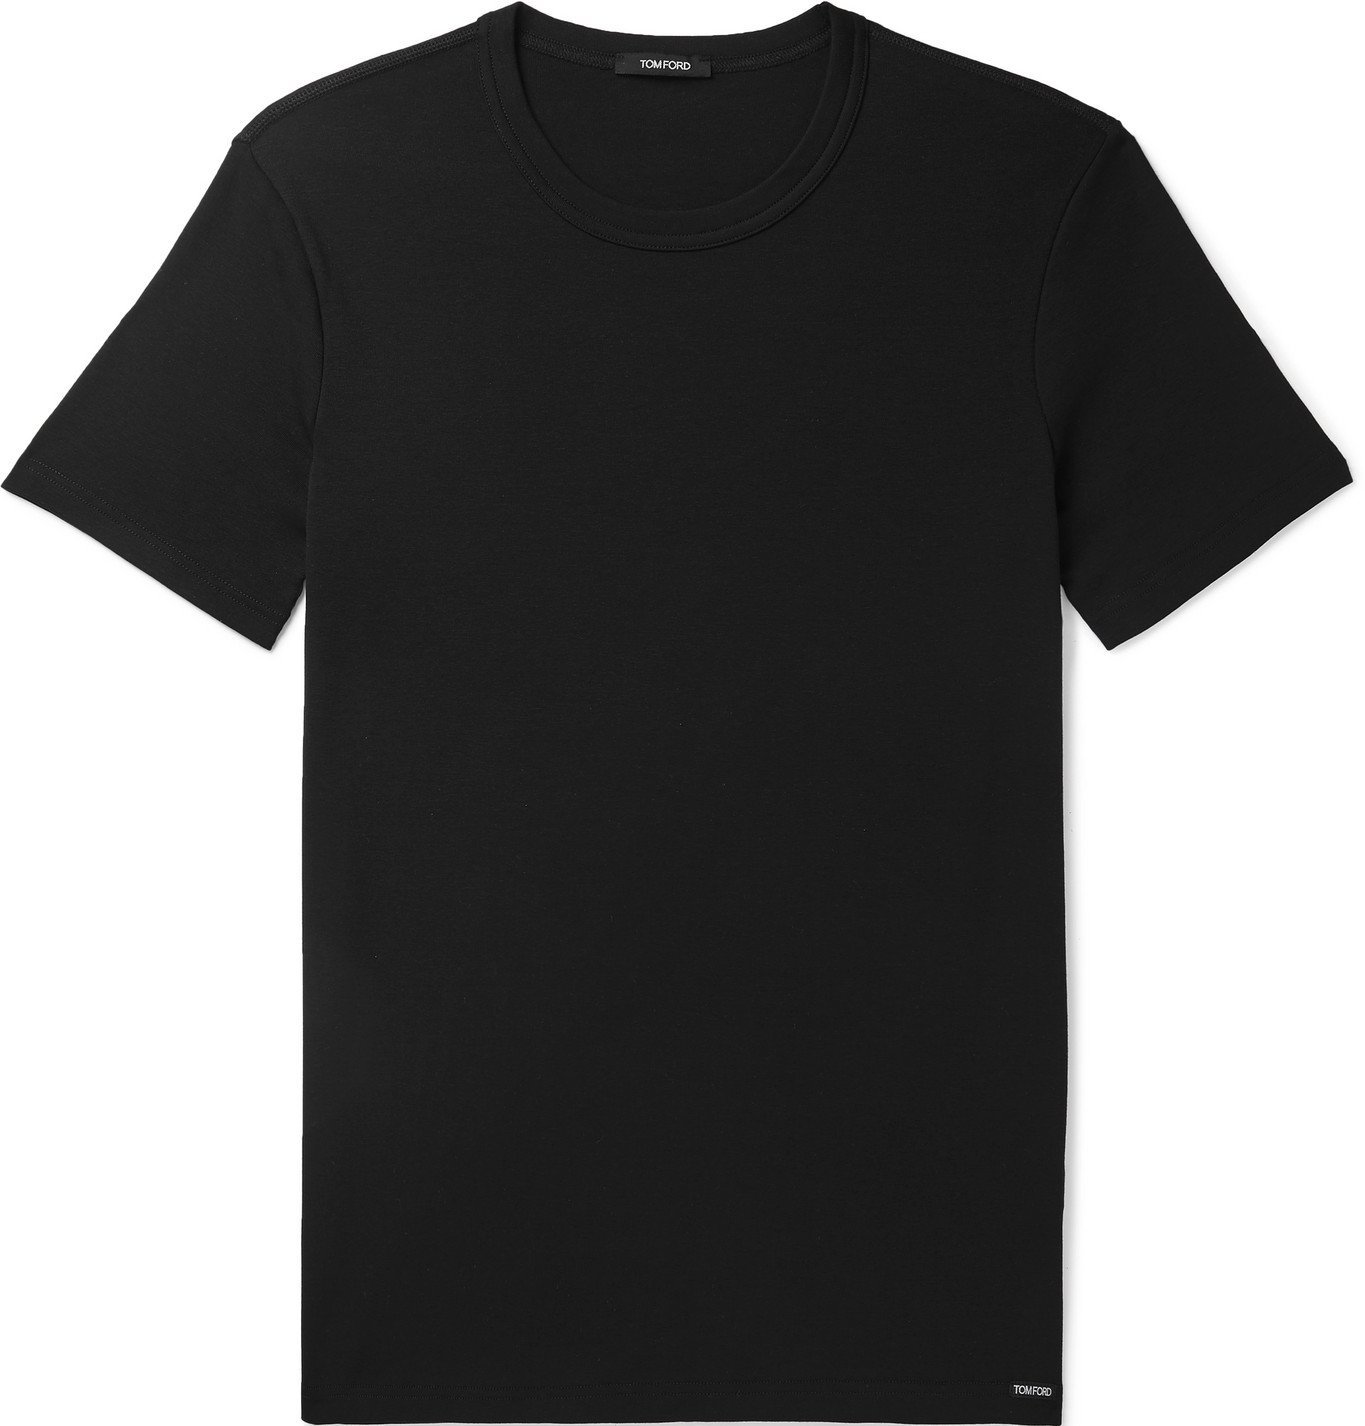 TOM FORD - Stretch-Cotton Jersey T-Shirt - Black TOM FORD